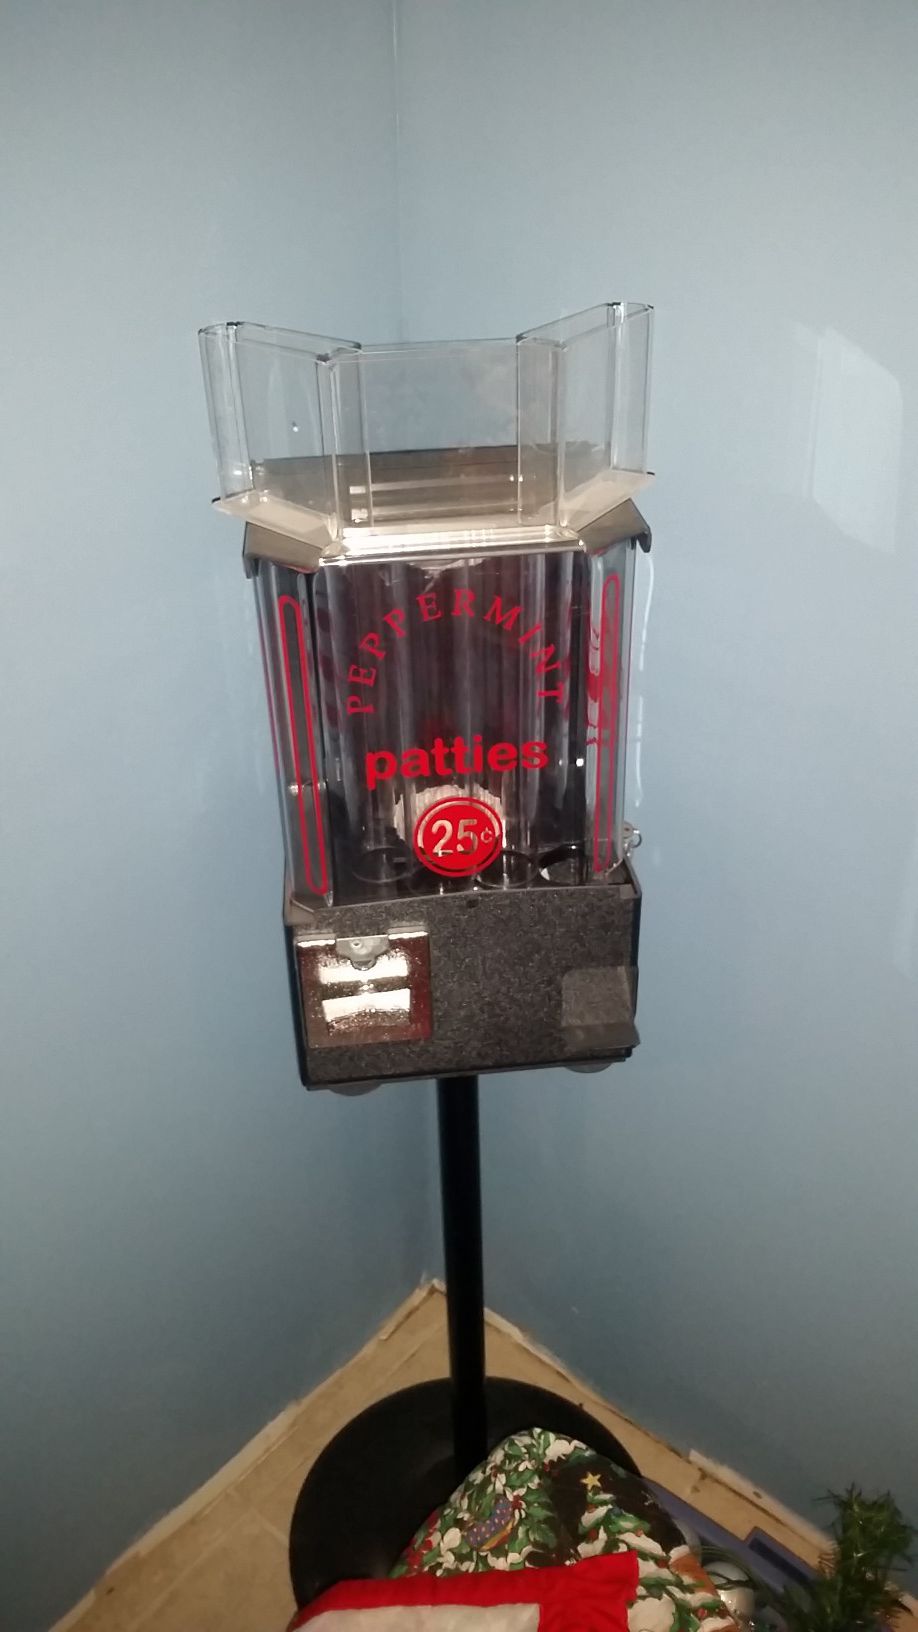 Peppermint Patty Vending Machine, Antique Countertop Vending Machine